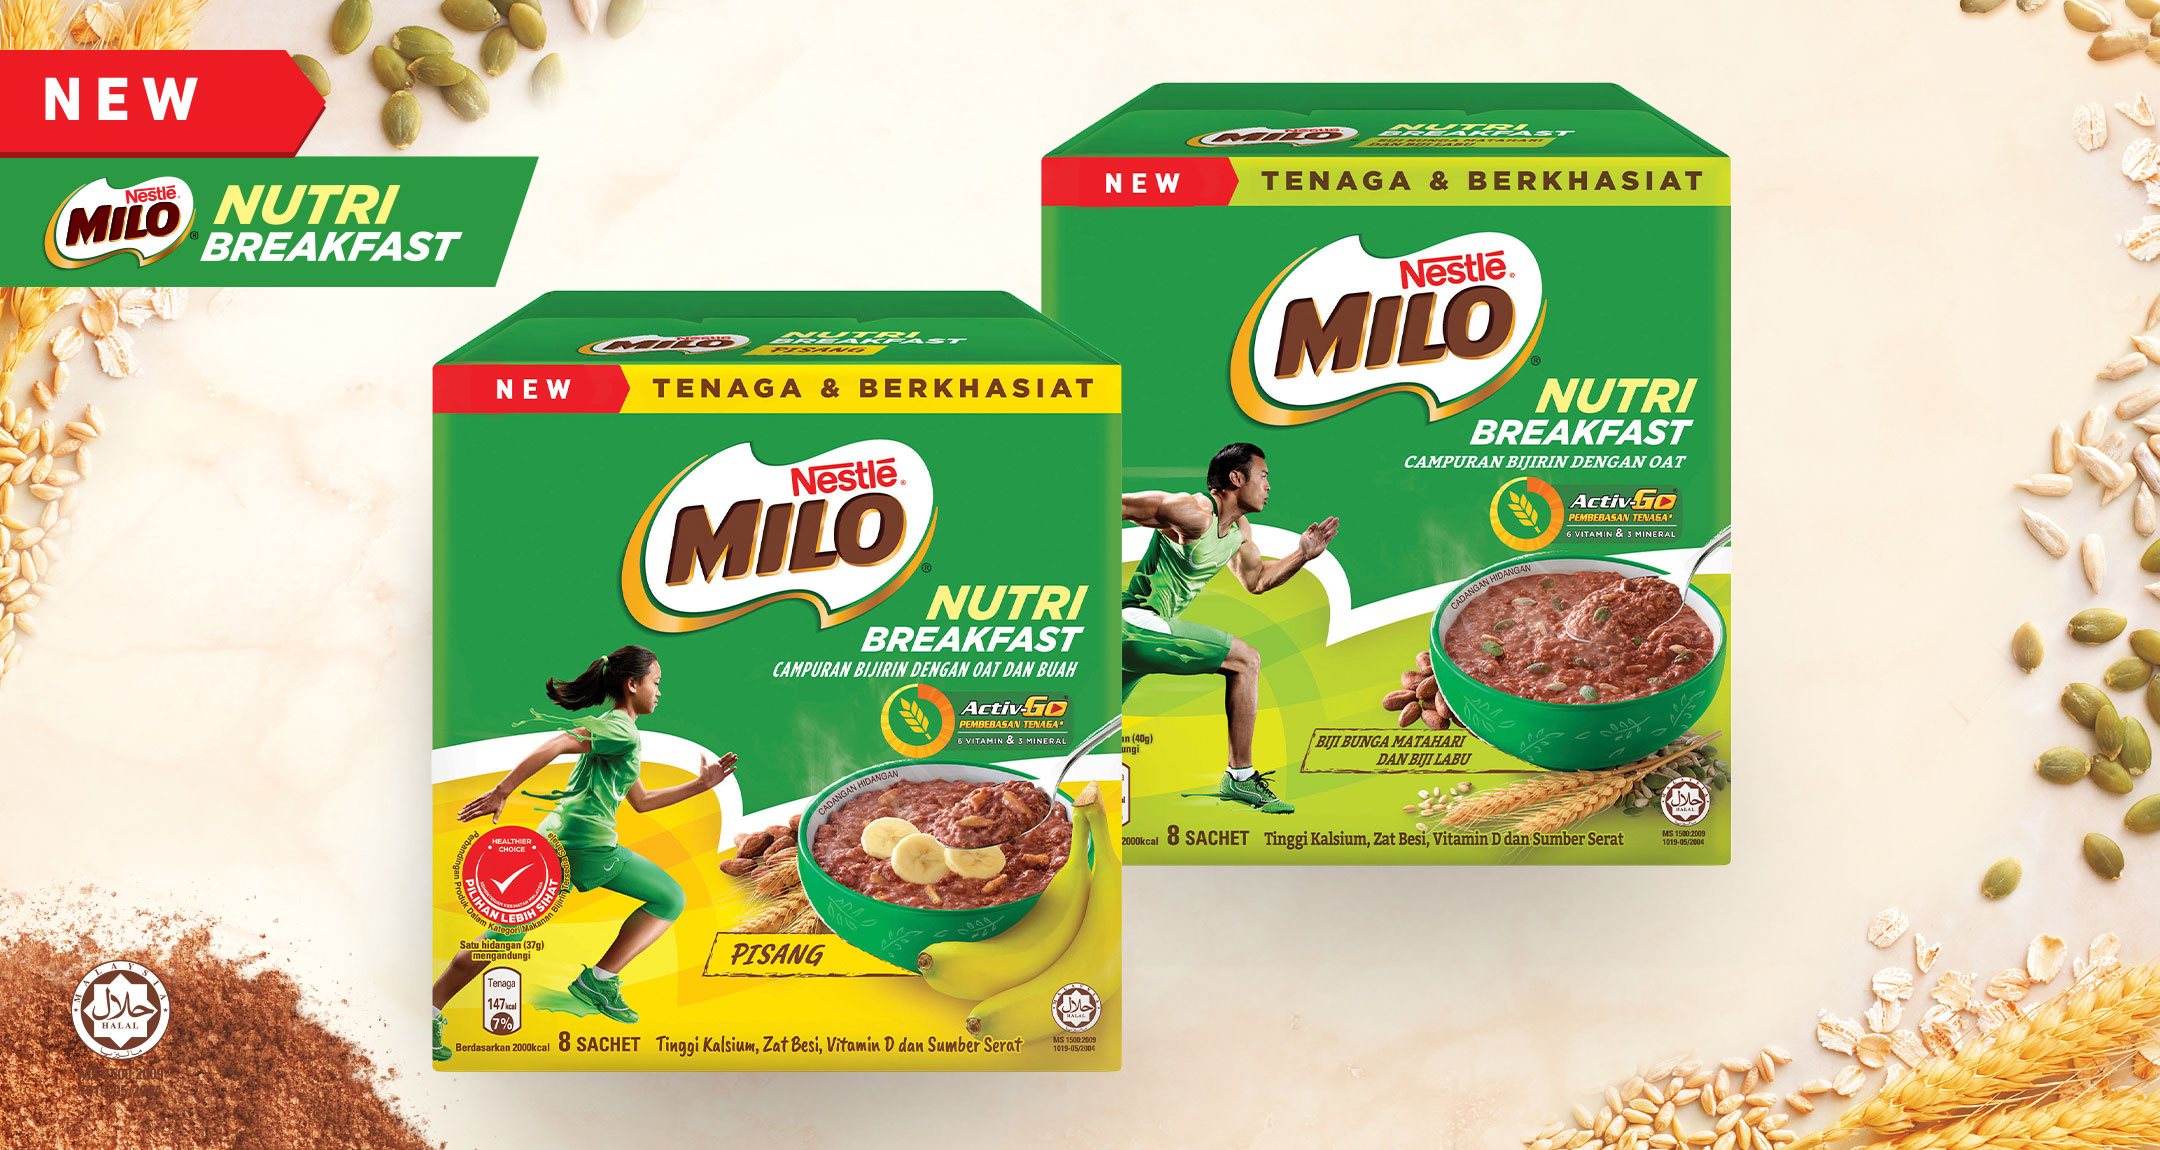 New MILO® Nutri Breakfast